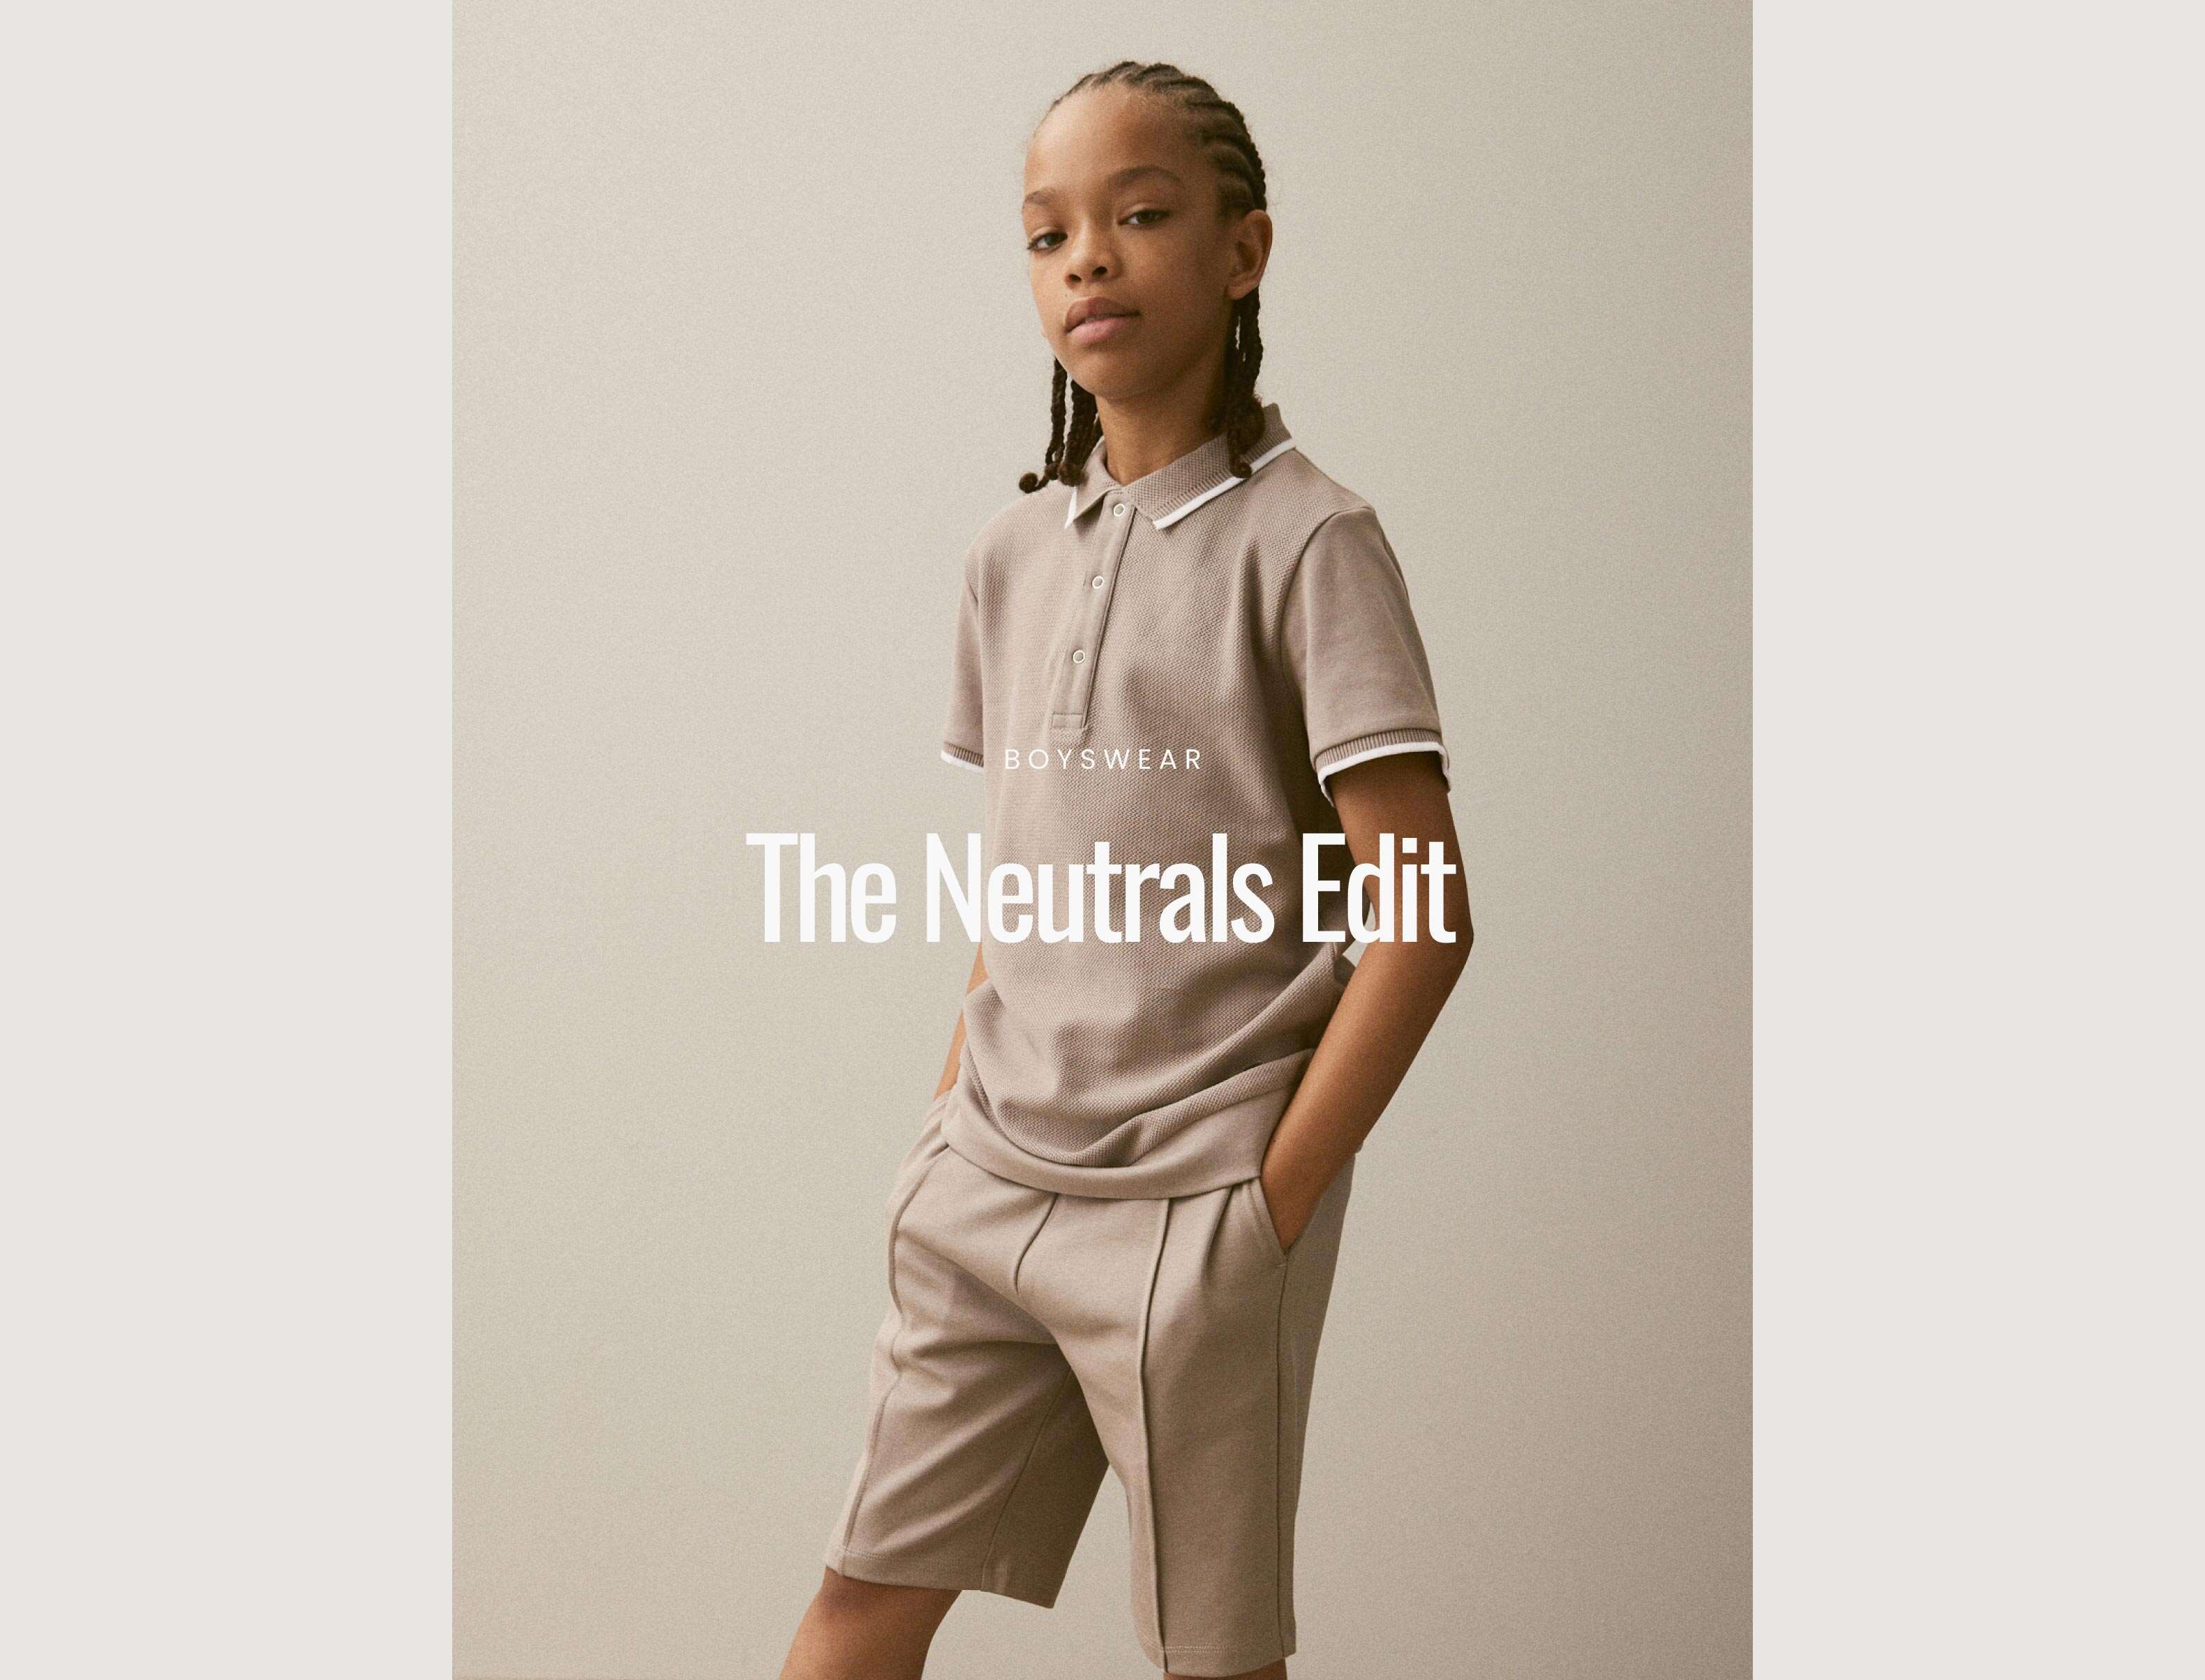 Boyswear - The Neutrals Edit